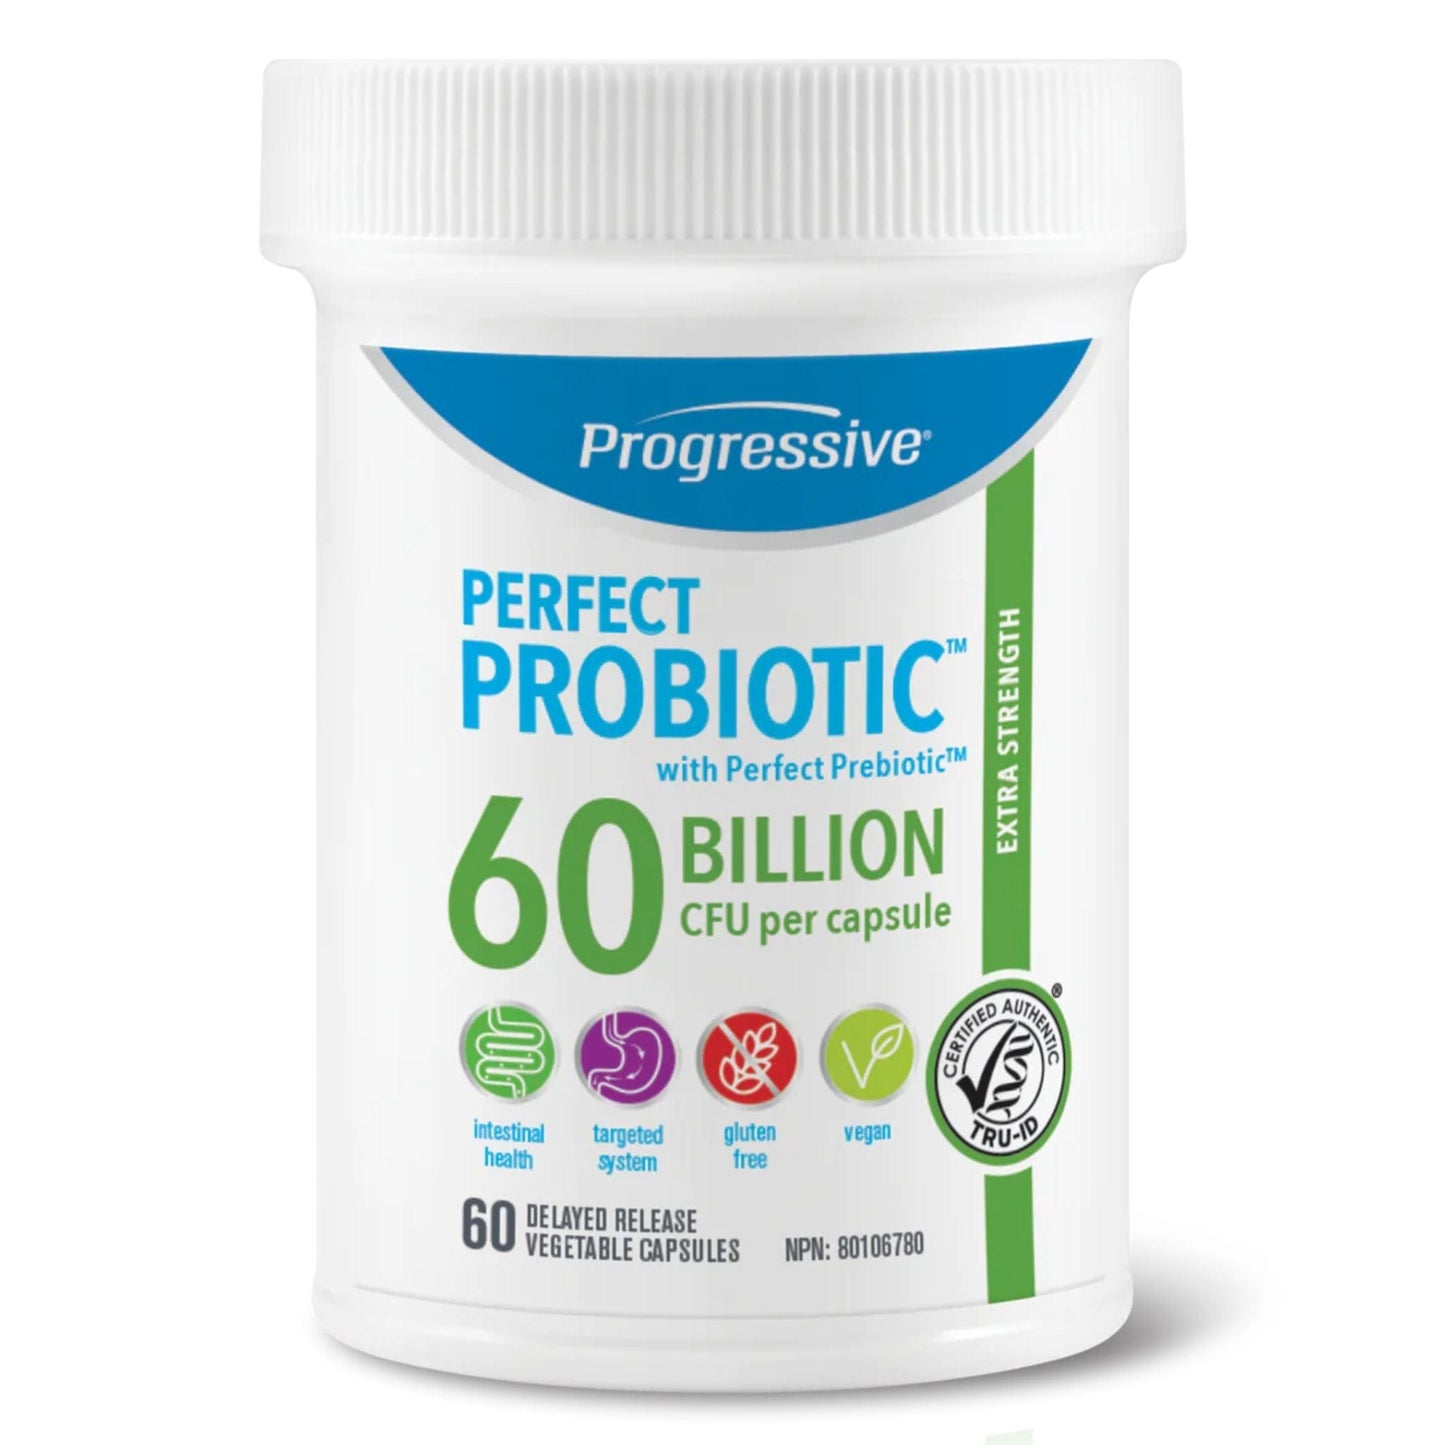 60 Delayed Release Vegetable Capsules | Bottle of Progressive Perfect Probiotic 60 Billion CFU Per Capsule 60 Delayed Release Vegetable Capsules